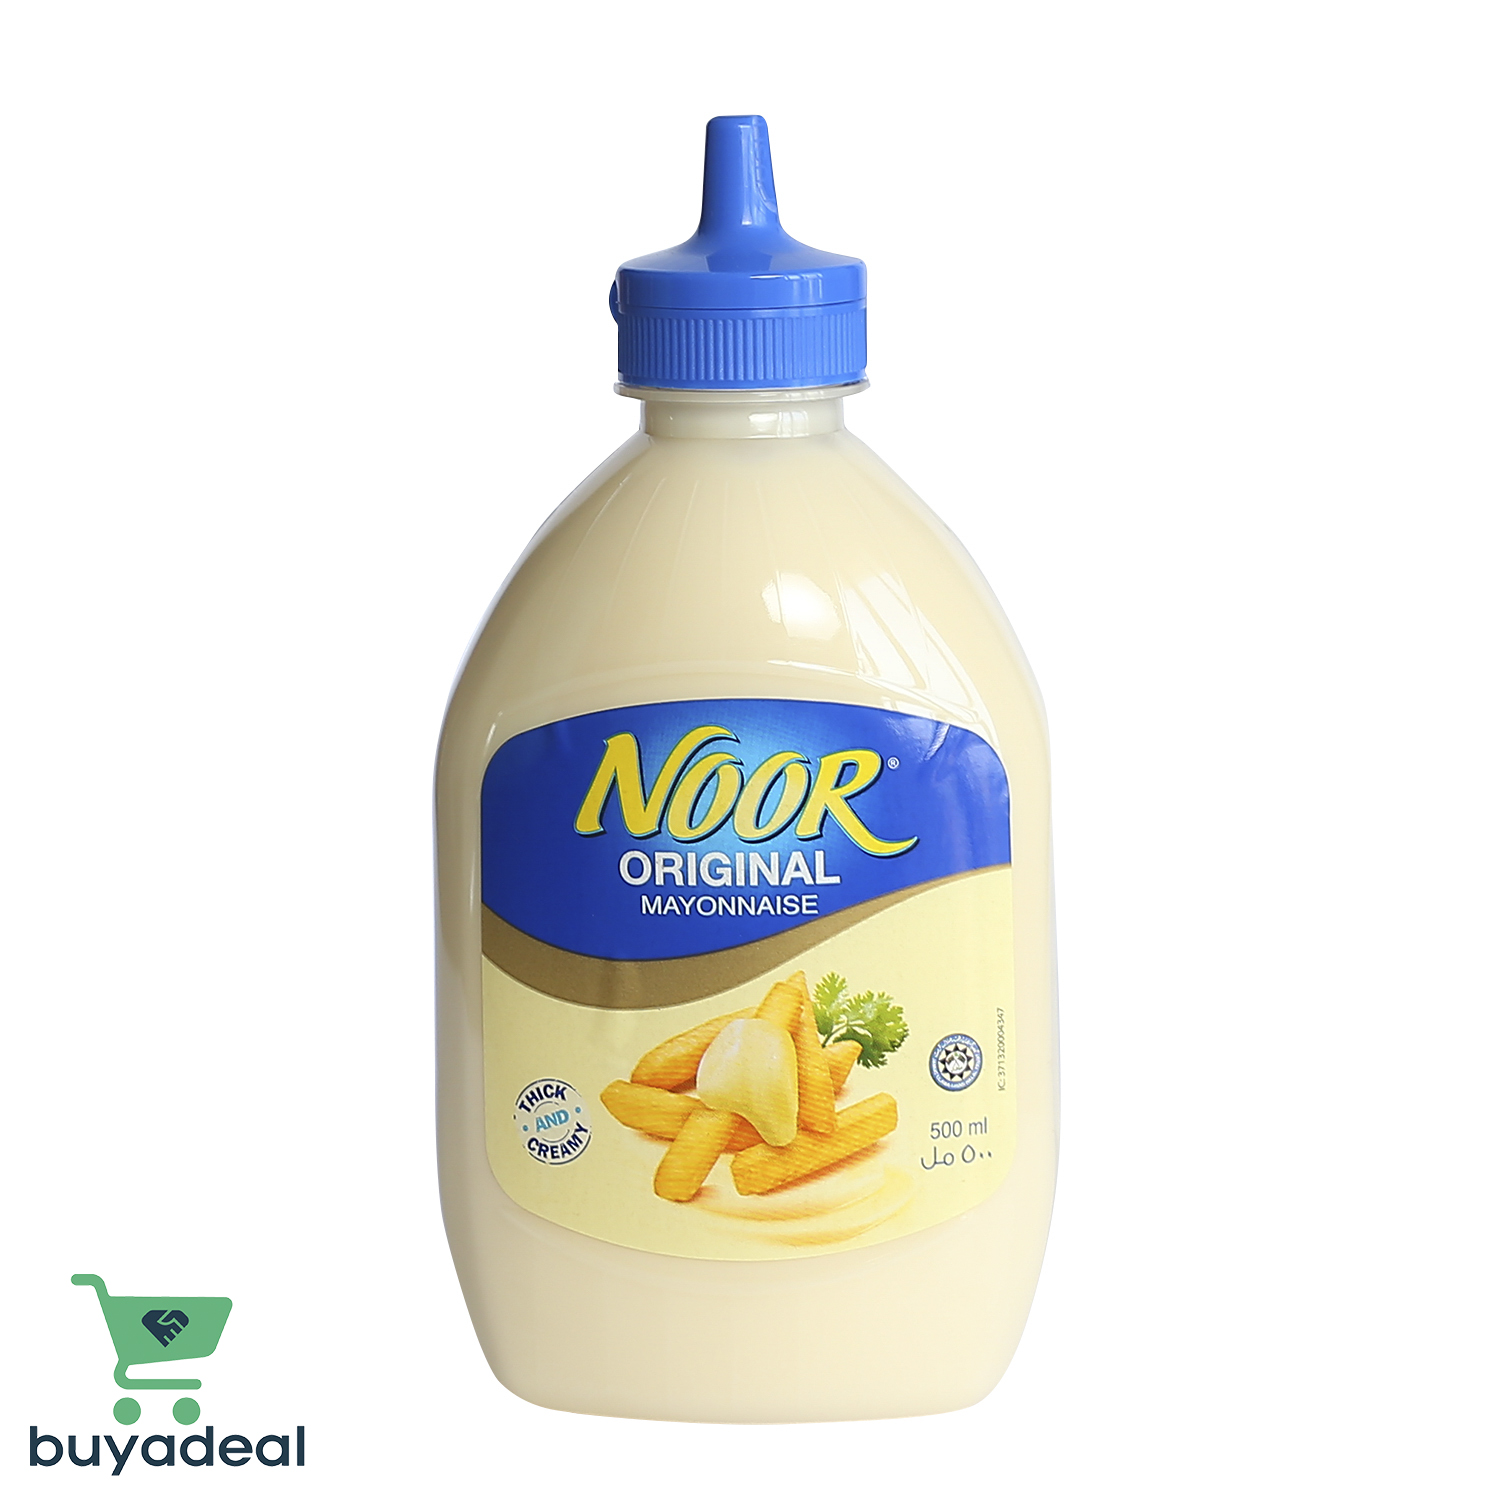 Buyadeal Product Noor Original Mayonnaise 500ml